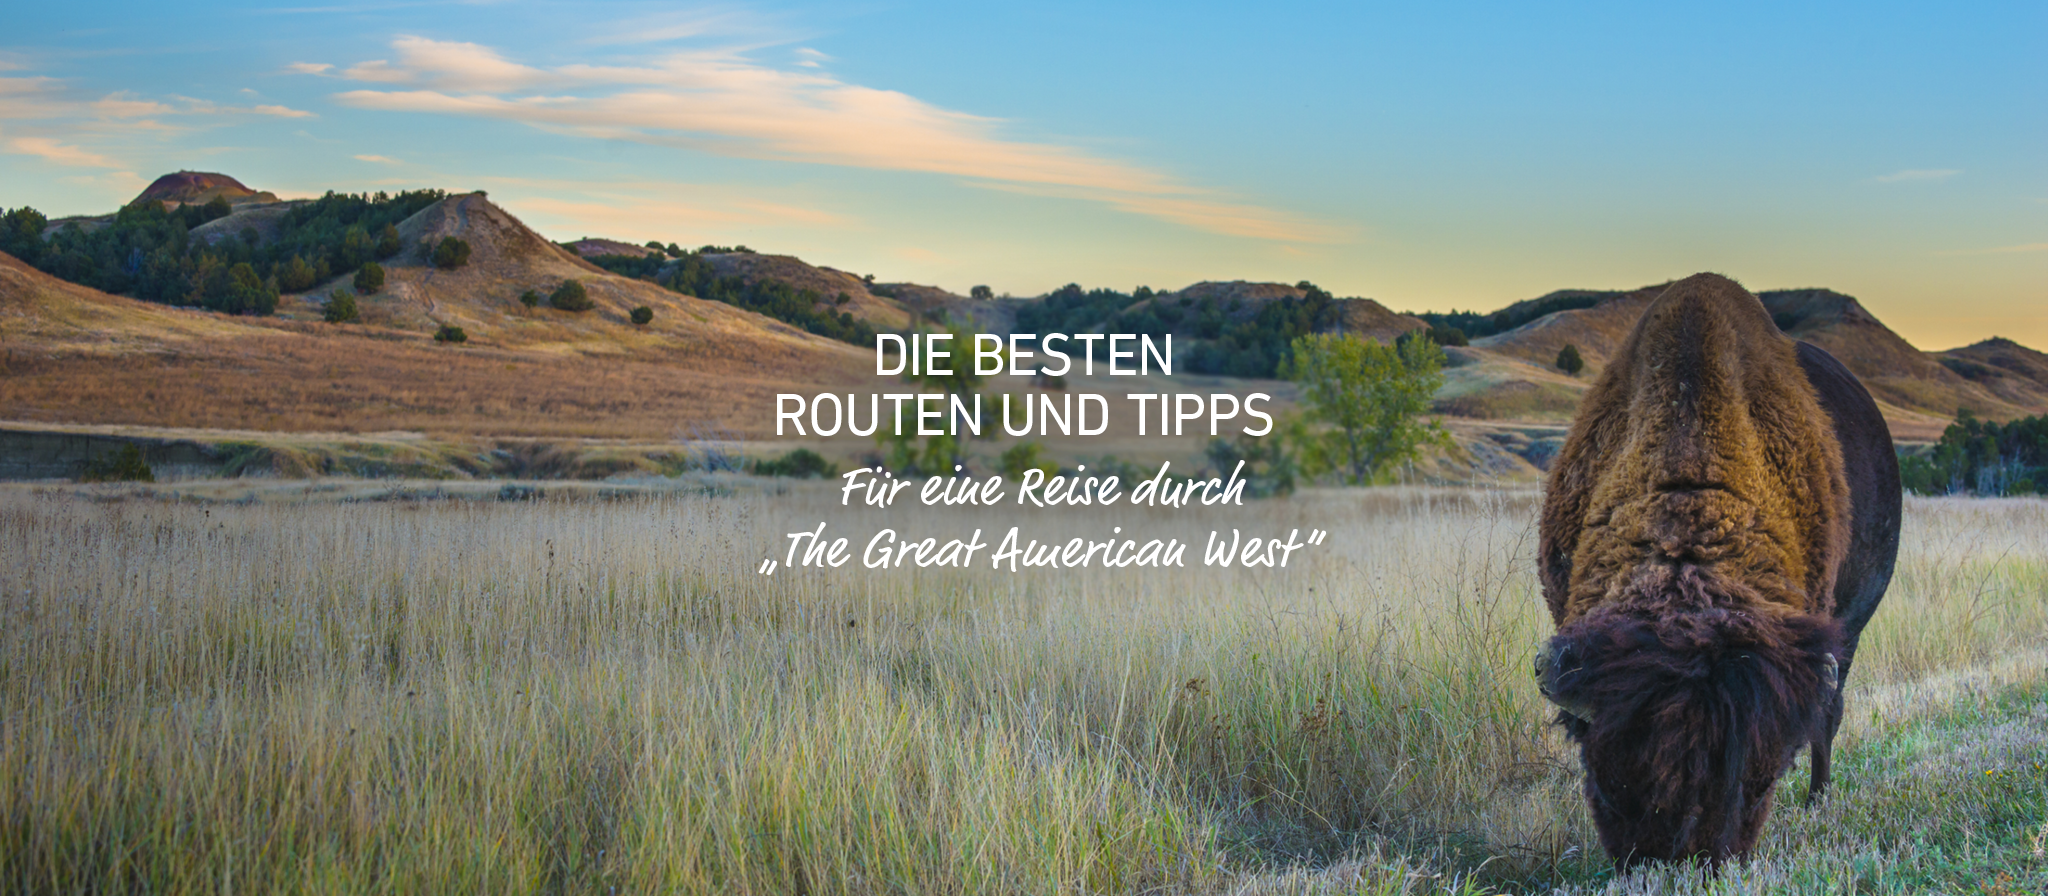 allgemein/homepage-elemente/banner/17banner-scenic-routes-great-american-west2